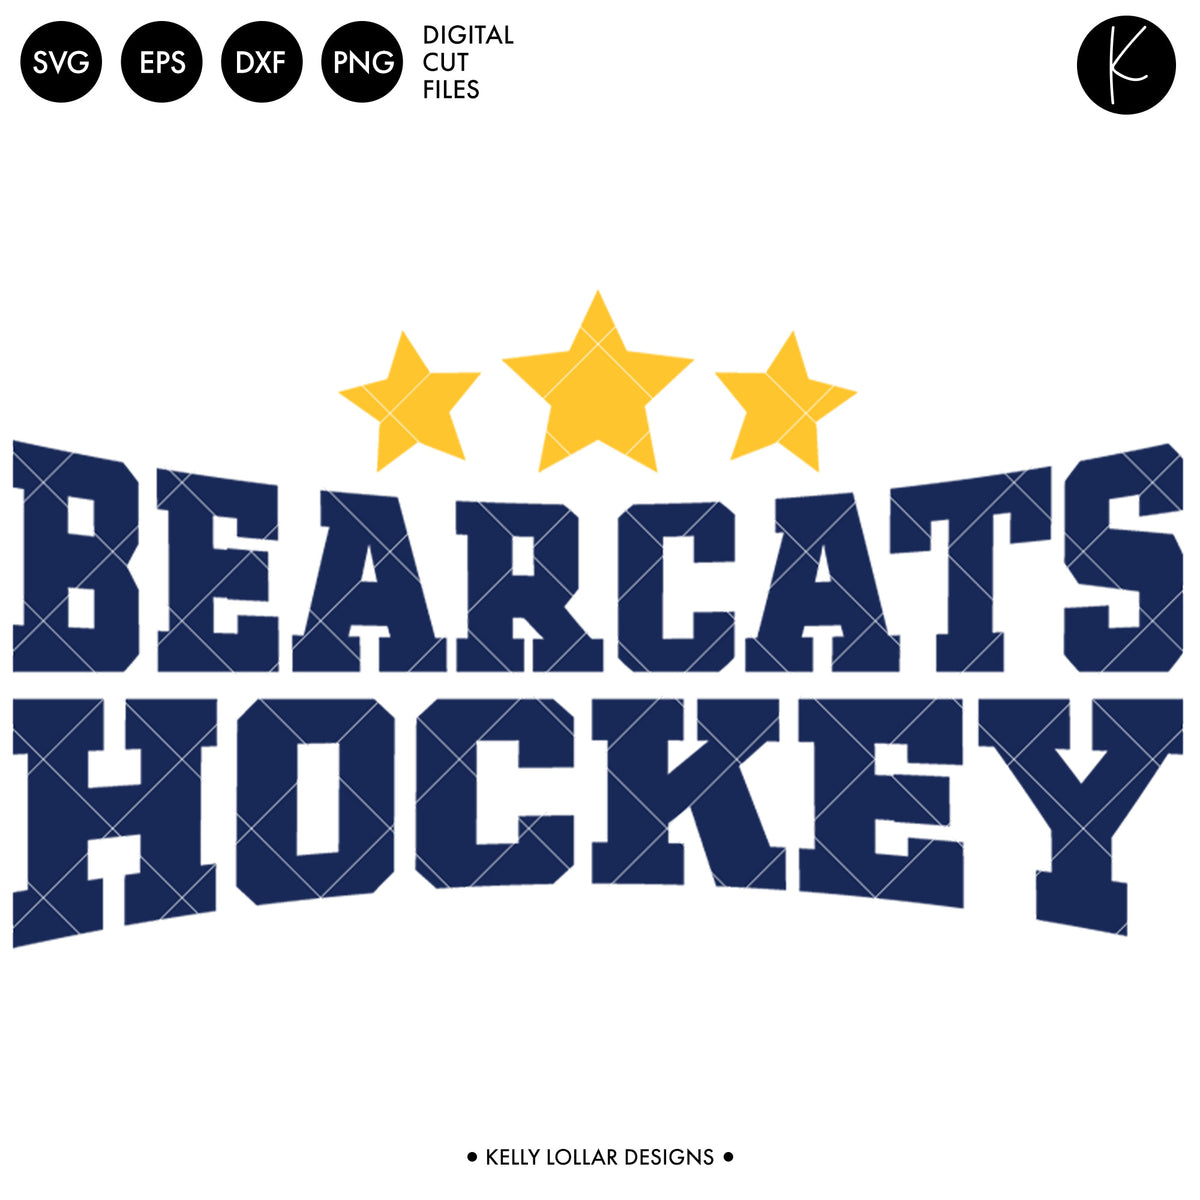 Bearcats Hockey Bundle | SVG DXF EPS PNG Cut Files